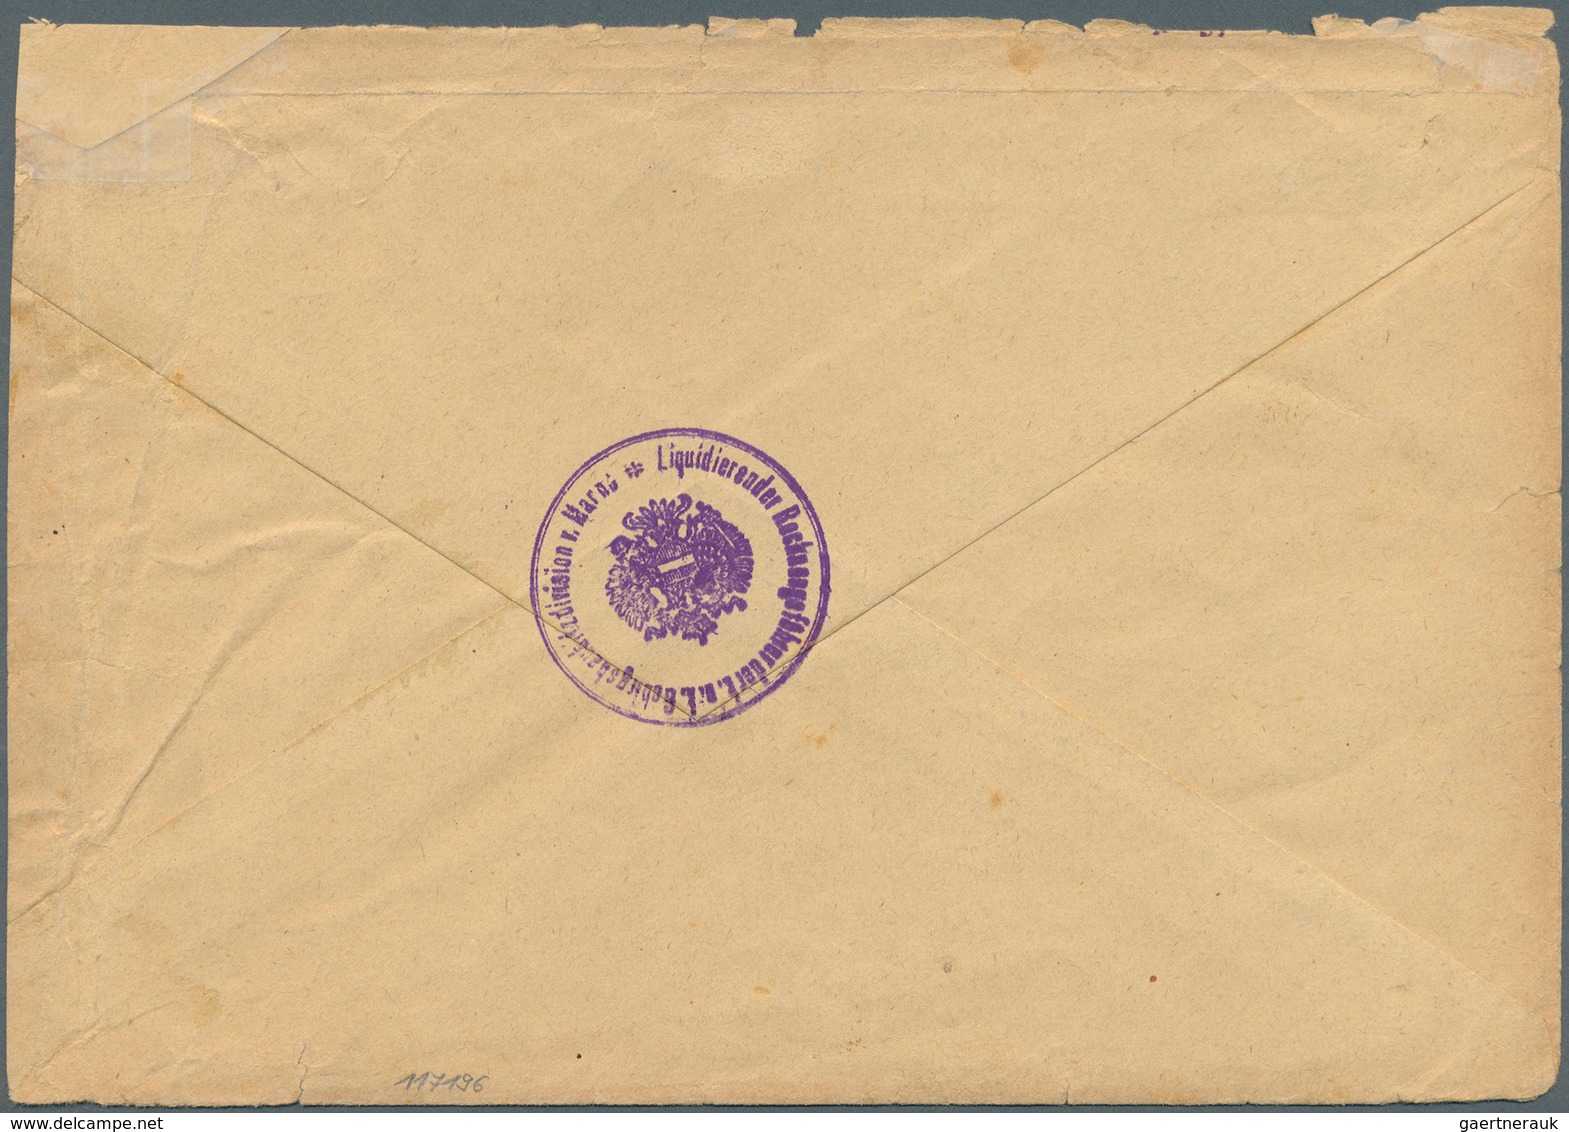 00341 Holyland: 1917, Registered Cover "Portofreie Dienstsache" From "JERUSALEM FELDPOST MIL.MISSION 24.9. - Palestina